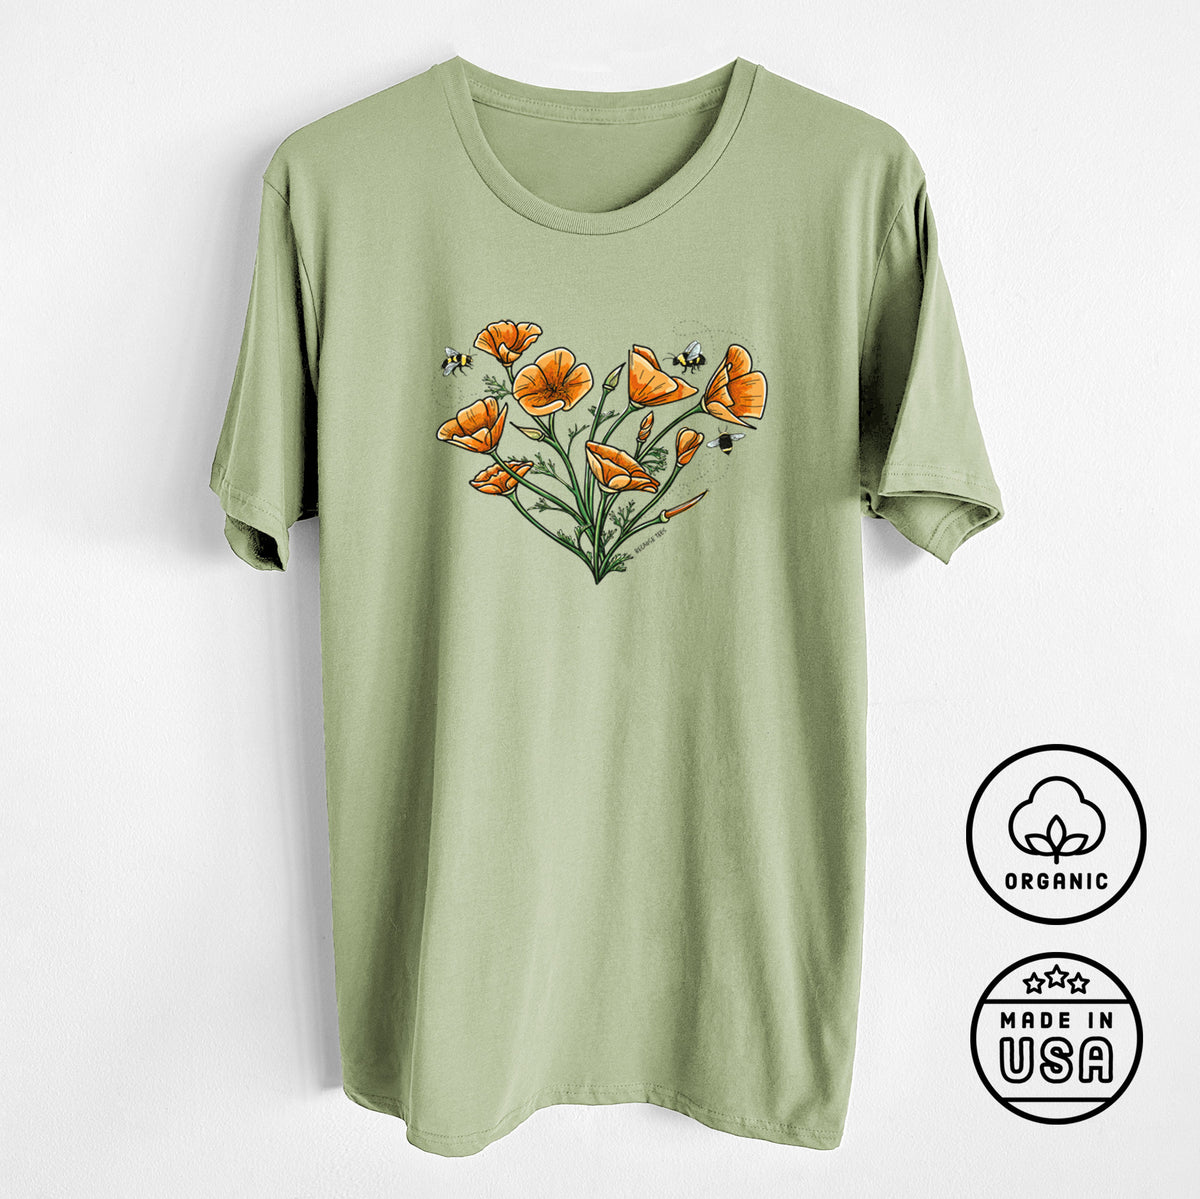 Color California Poppy Heart - Unisex Crewneck - Made in USA - 100% Organic Cotton